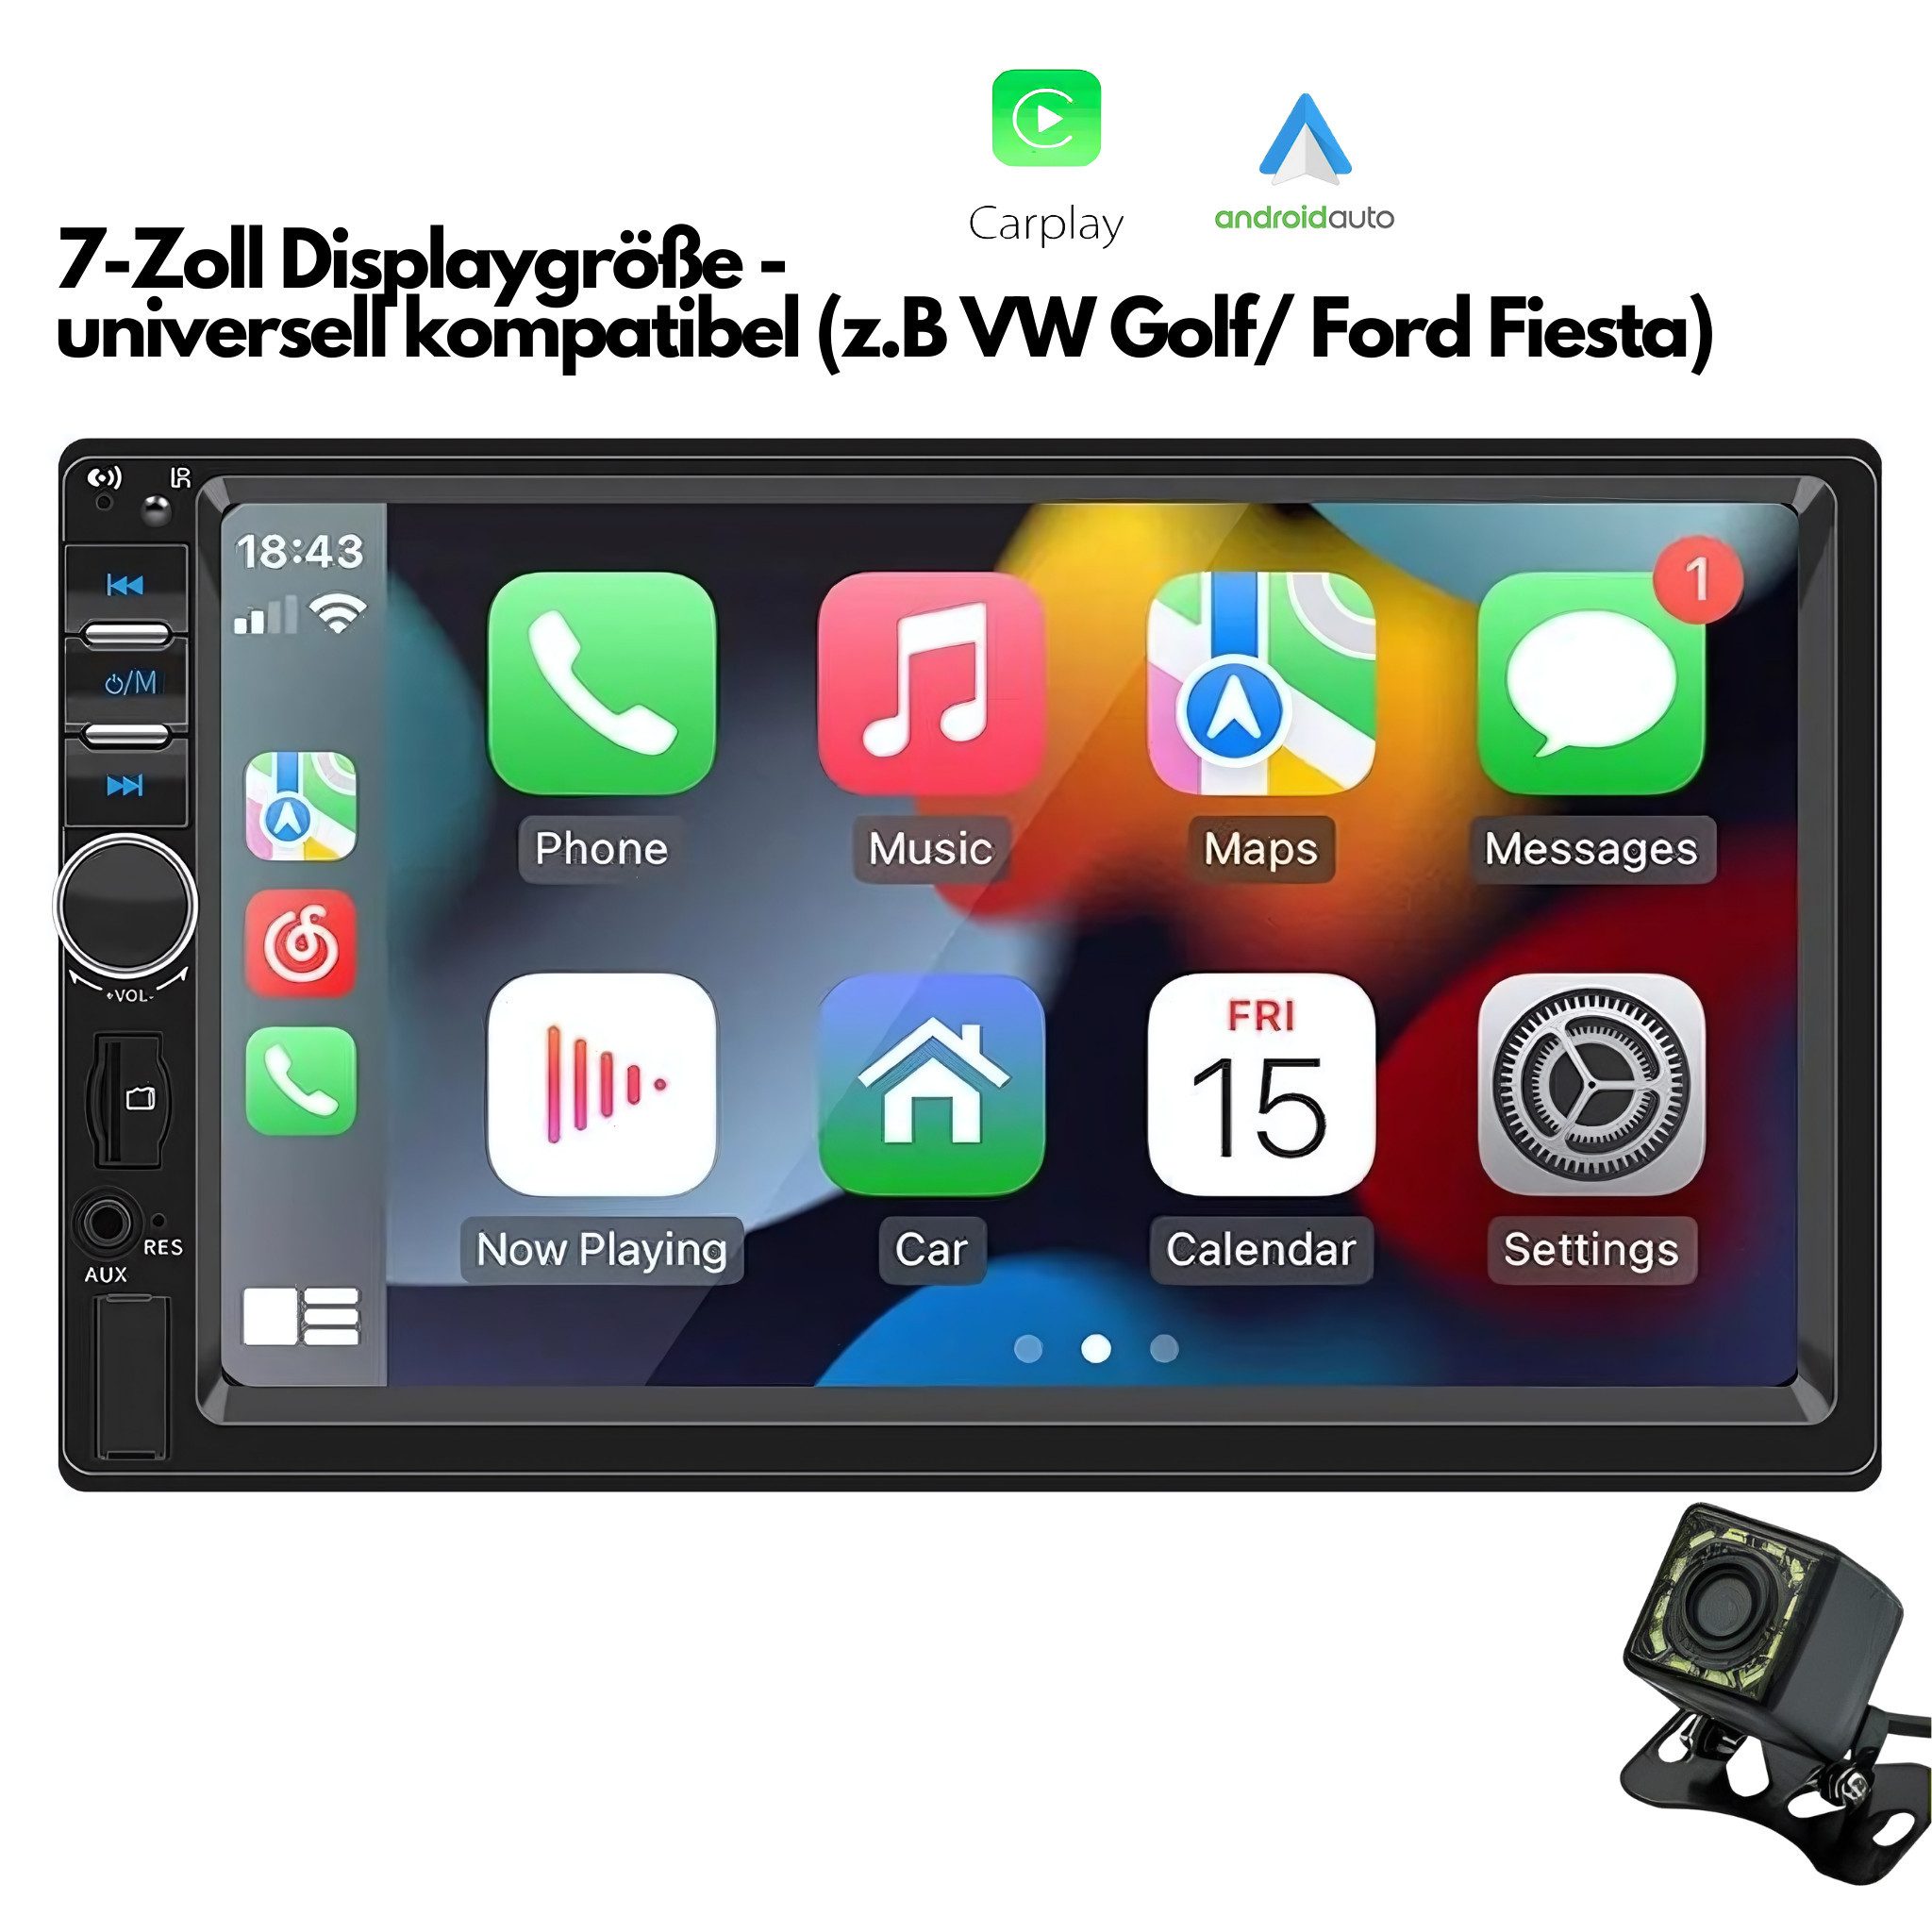 Magcubic Universal Carplay, Android Auto Autoradio 7 Zoll PKW-Navigationsgerät (Universell kompatibel, mit Verdrahtungsschutz, Touch Screen)